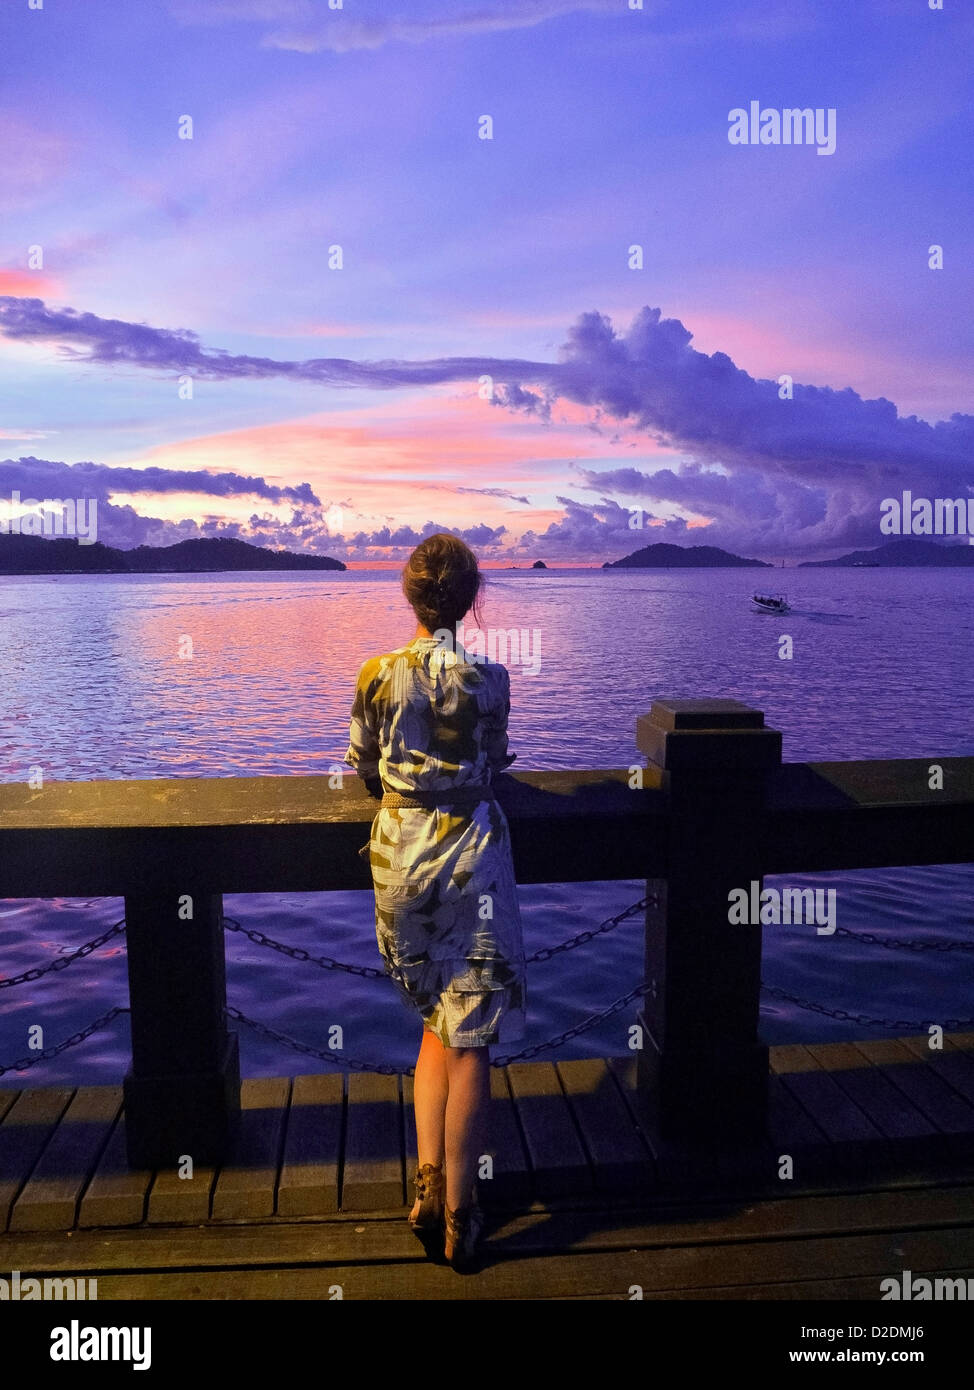 Malasia, Borneo, Kota Kinabalu, el Mar de China Meridional, el joven viendo la puesta de sol Foto de stock